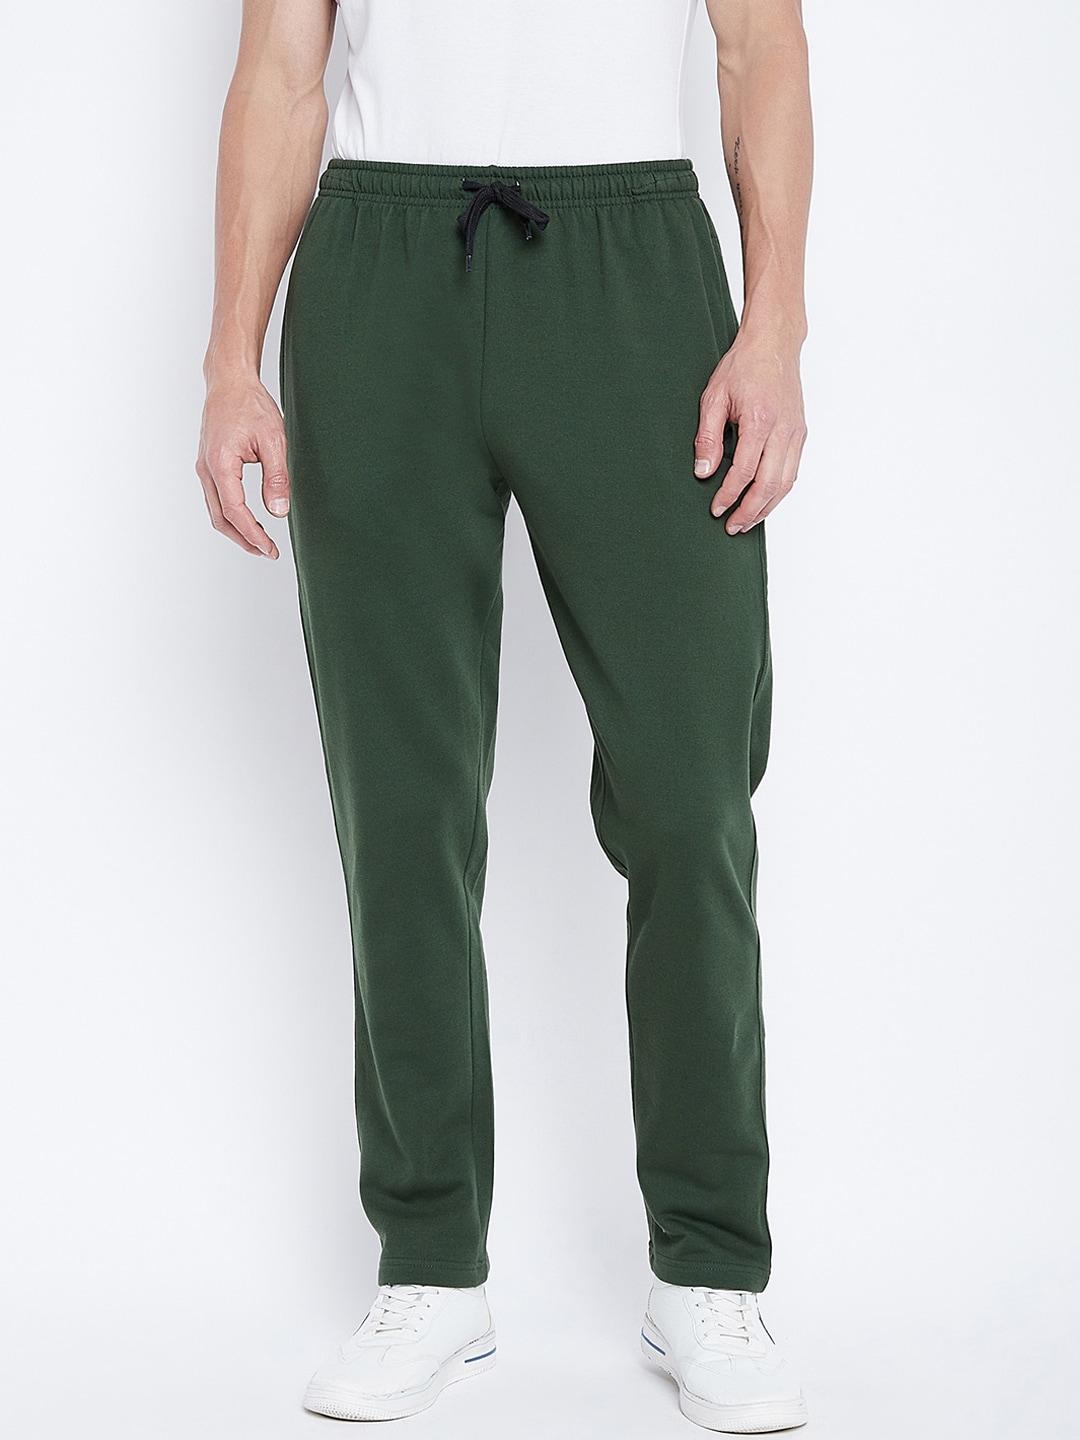 adobe-men-green-solid-track-pants